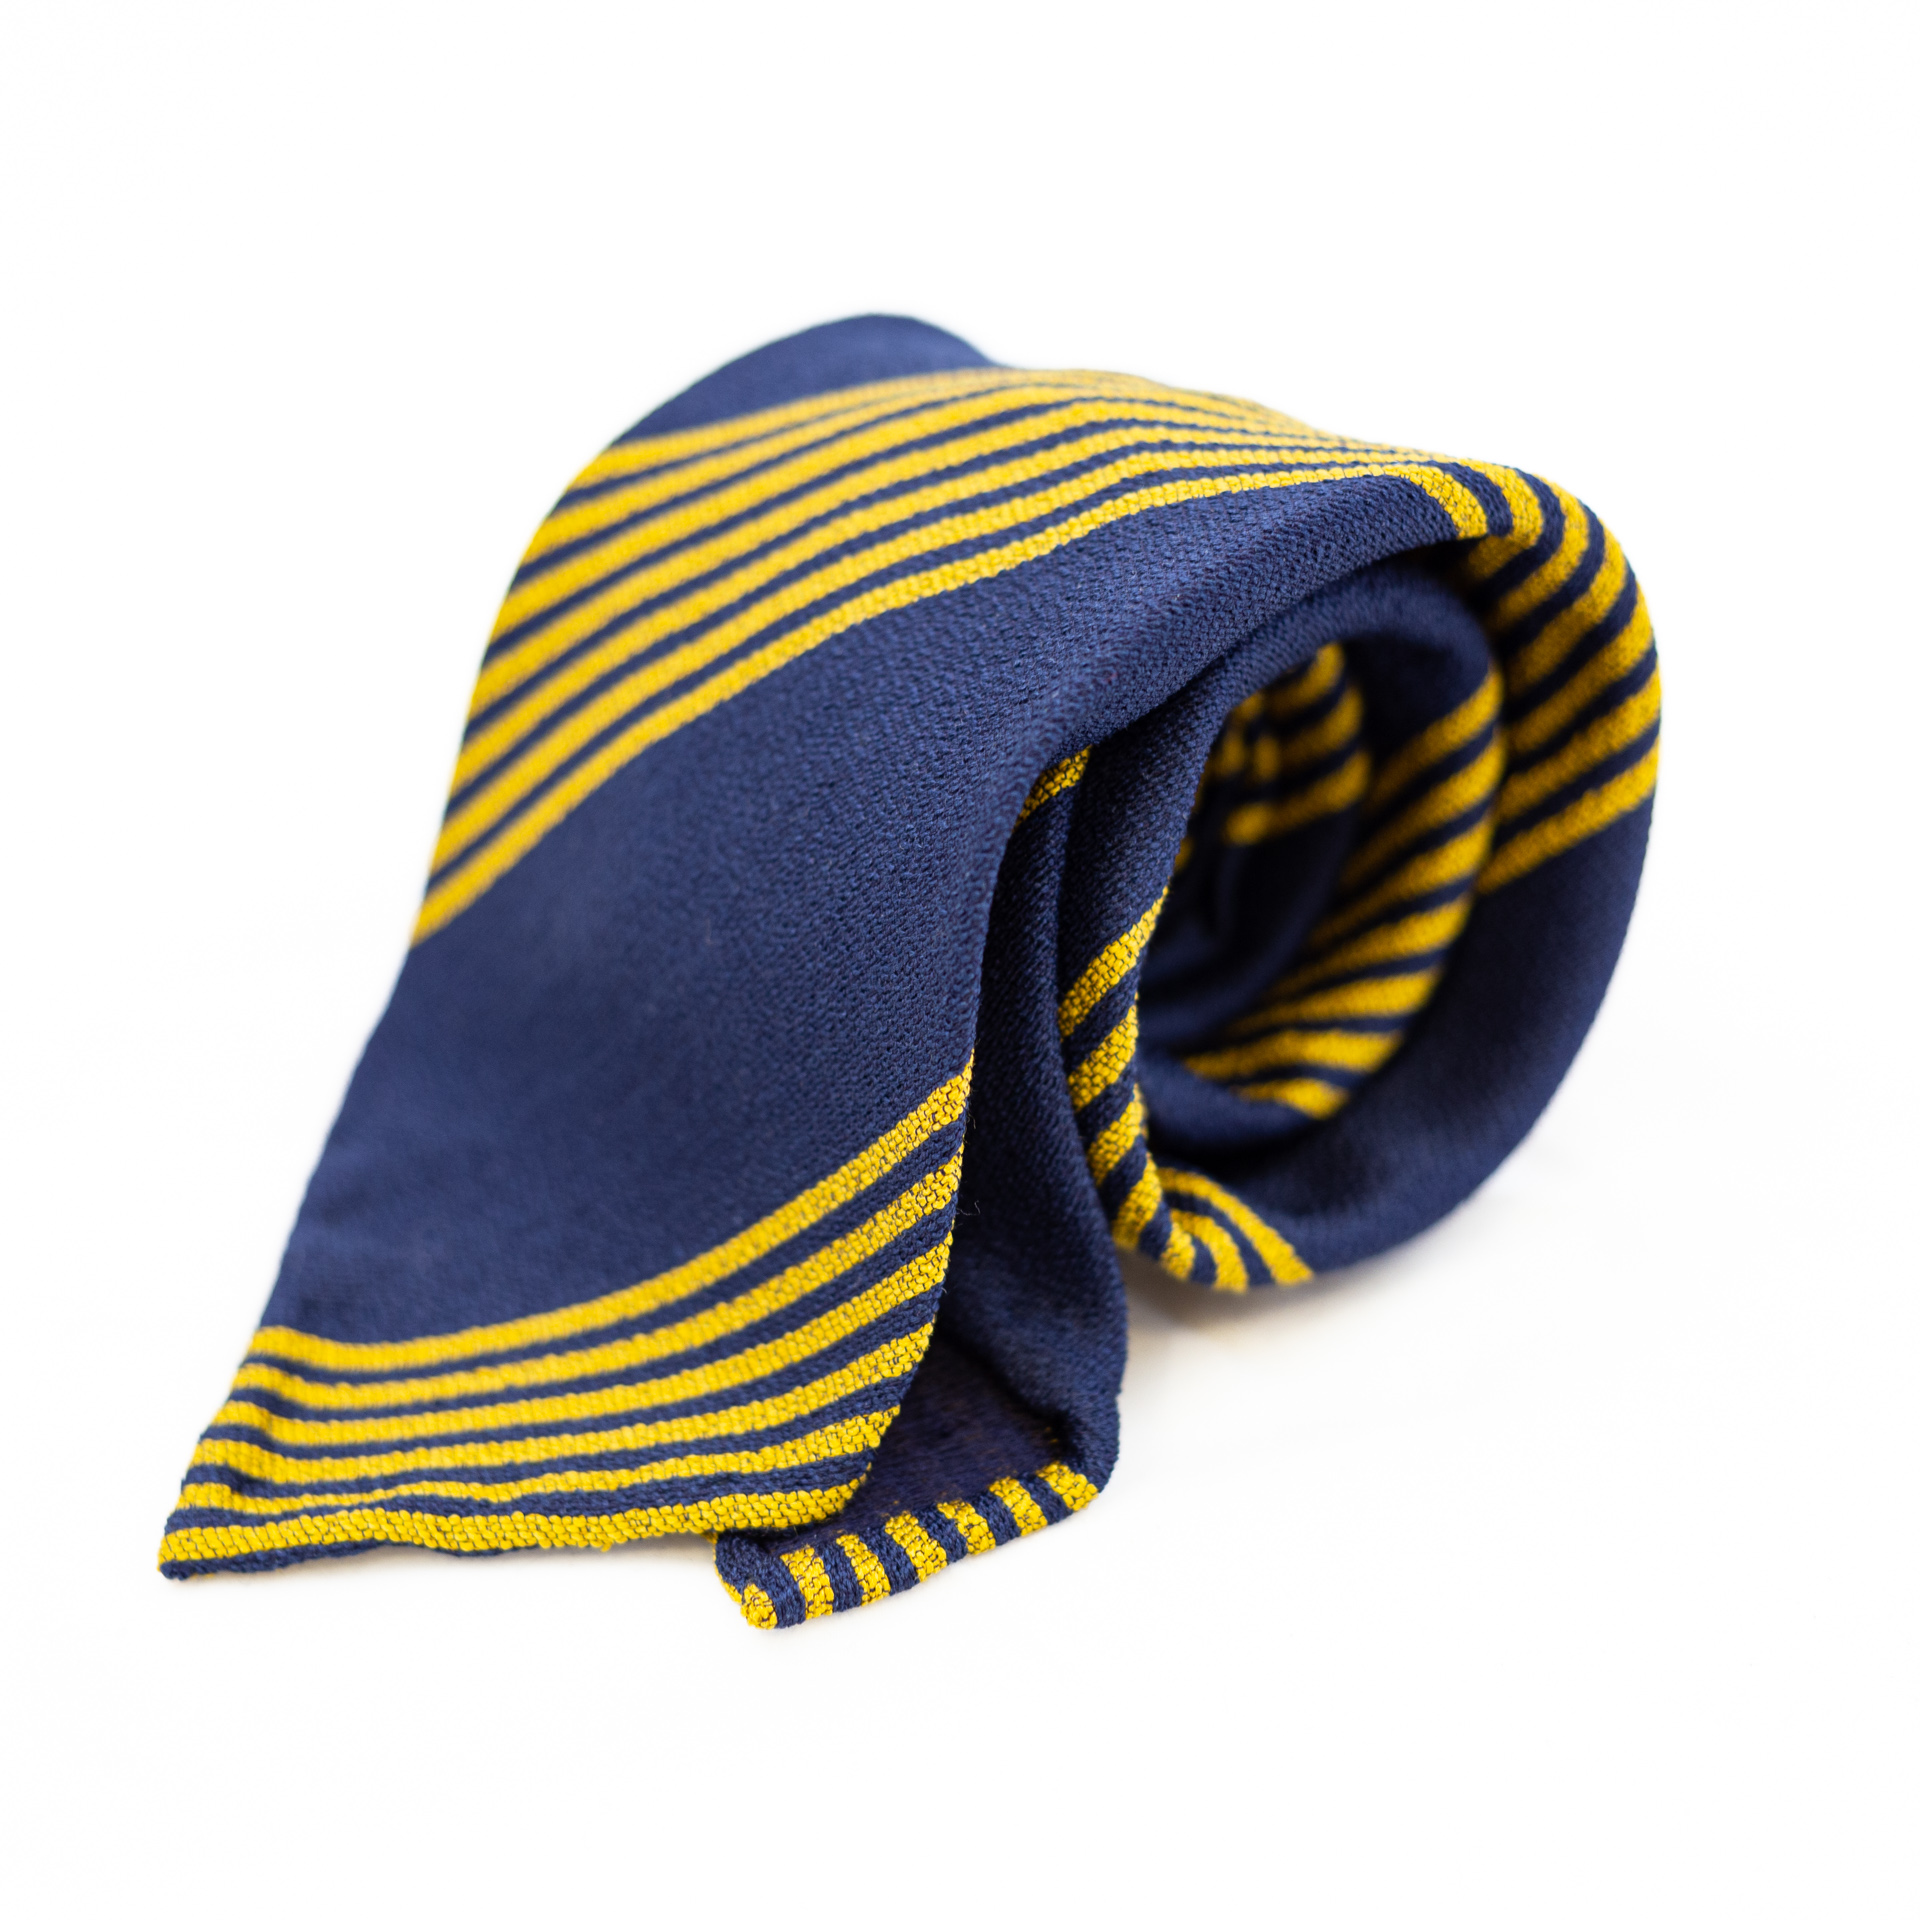 DLA 5-fold navy and yellow striped tie folded